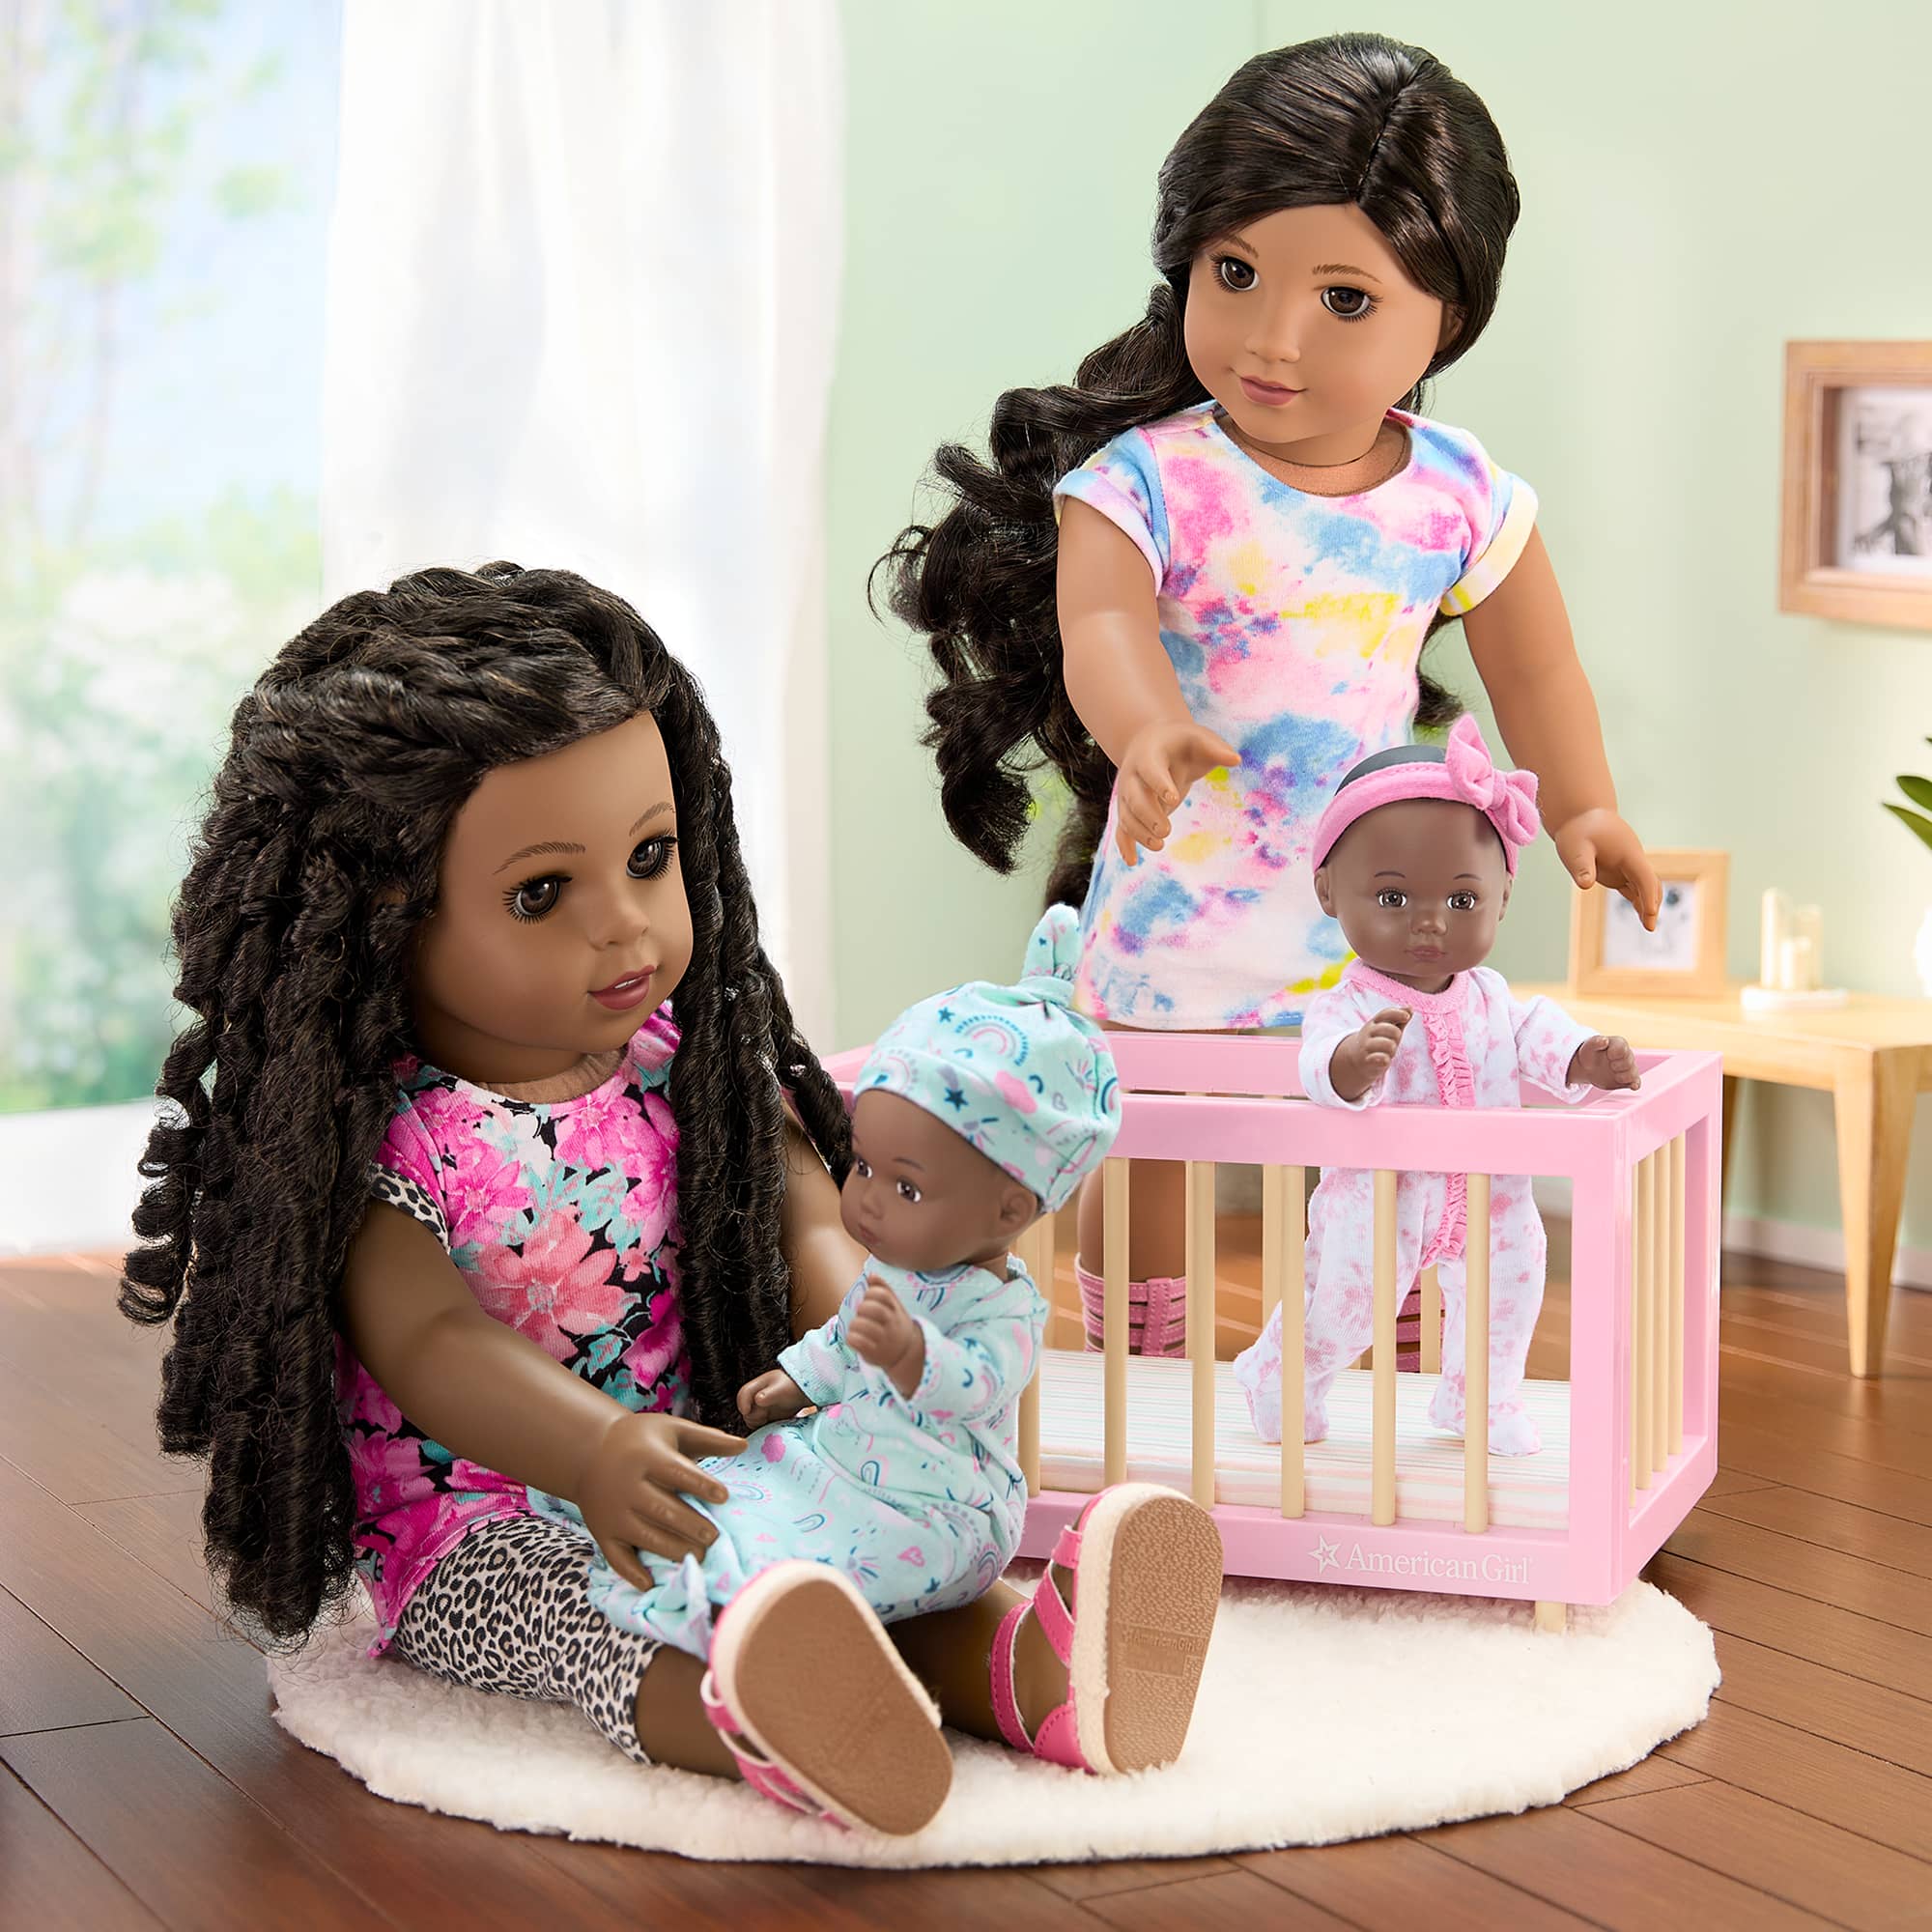 Little Bitty Baby™ Crib & Sleeper Set for 7.75-inch Dolls